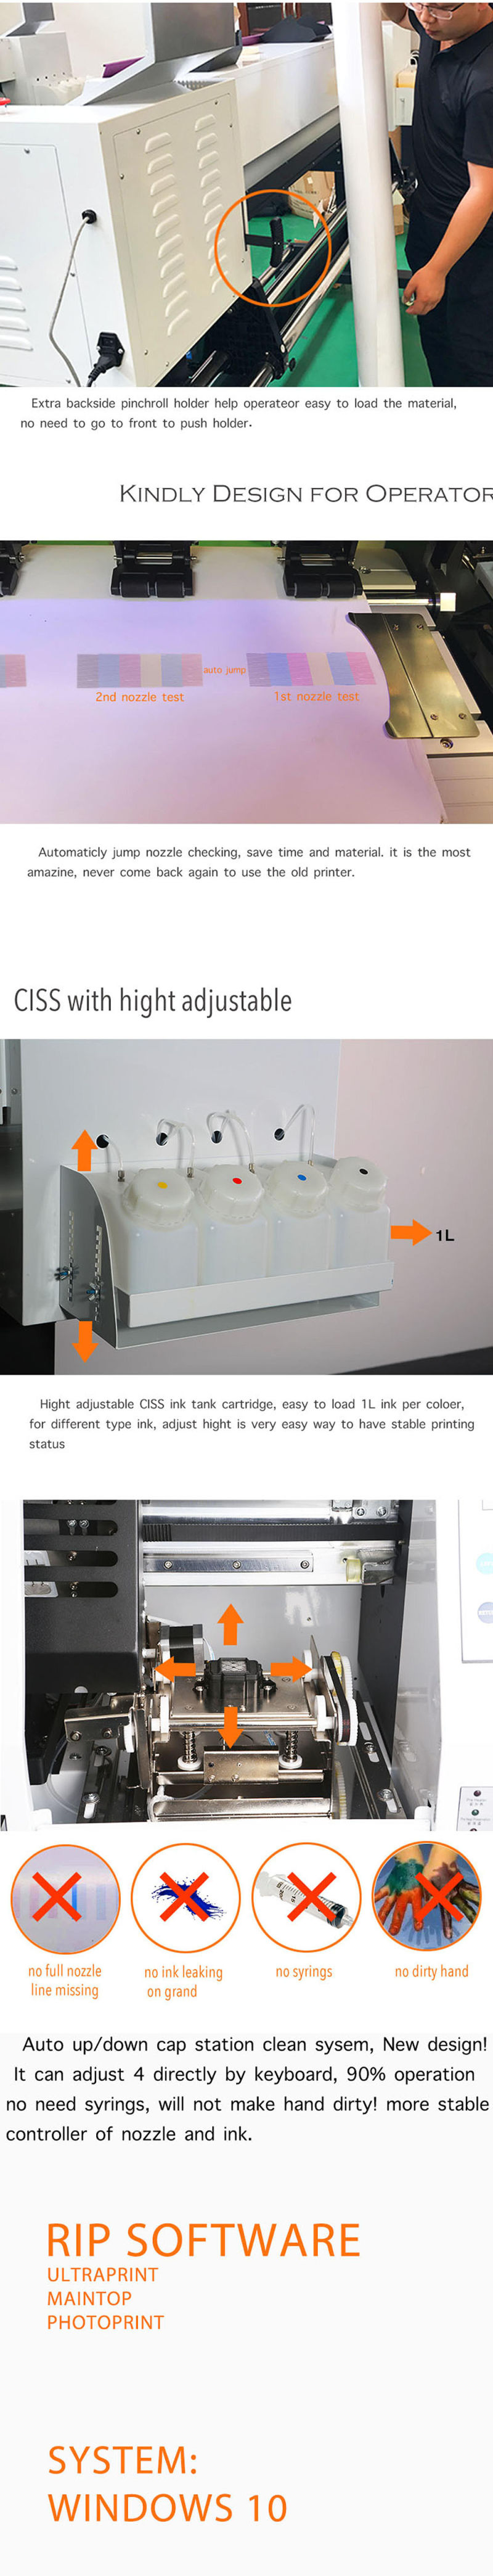 Tecjet S 1671 Dx7 Manufactory Direct Sale Digital PVC Large Format Printer